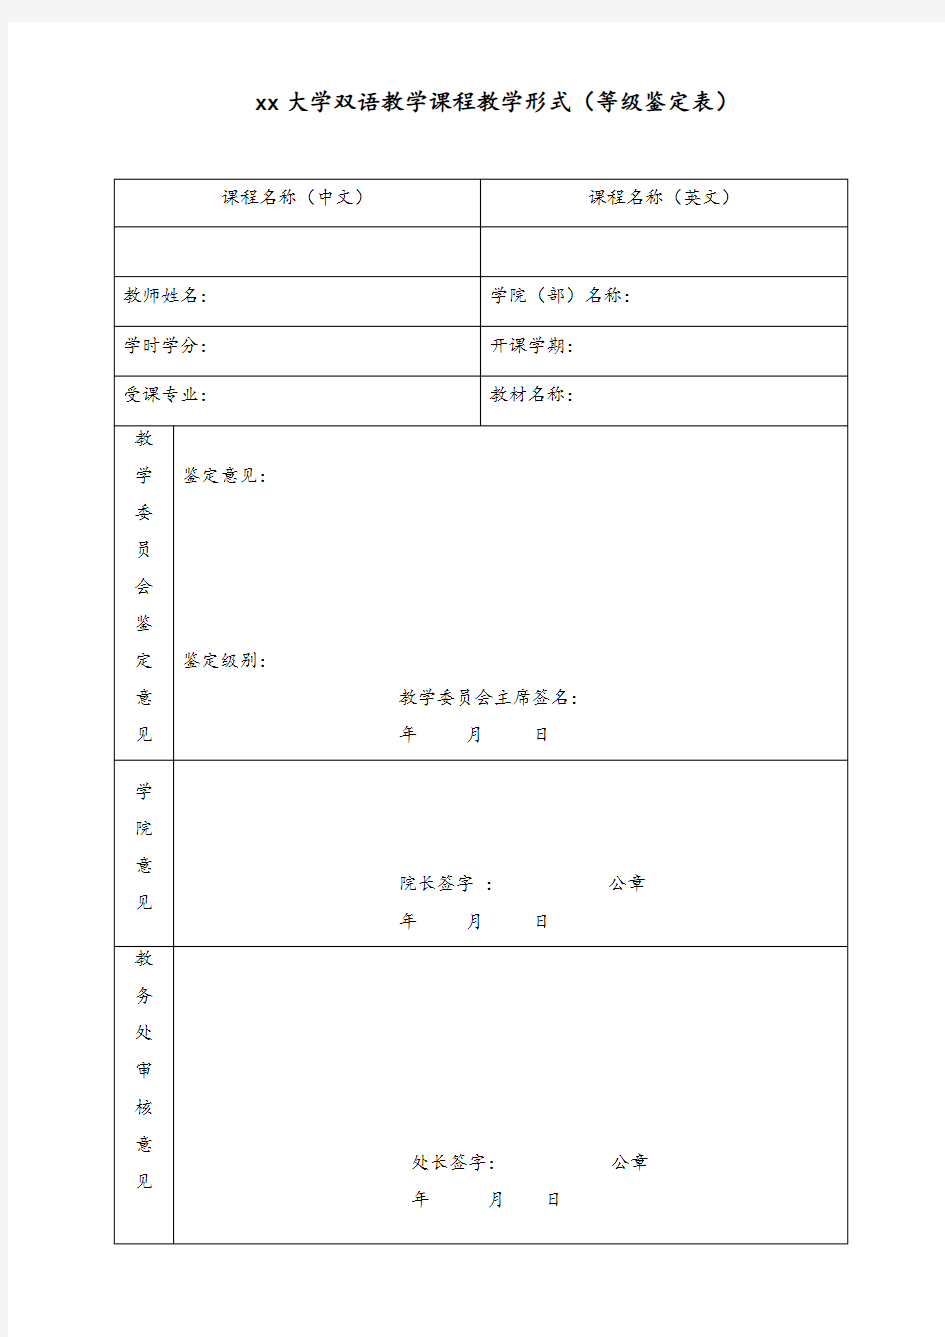 xx大学双语教学课程教学形式(等级鉴定表)